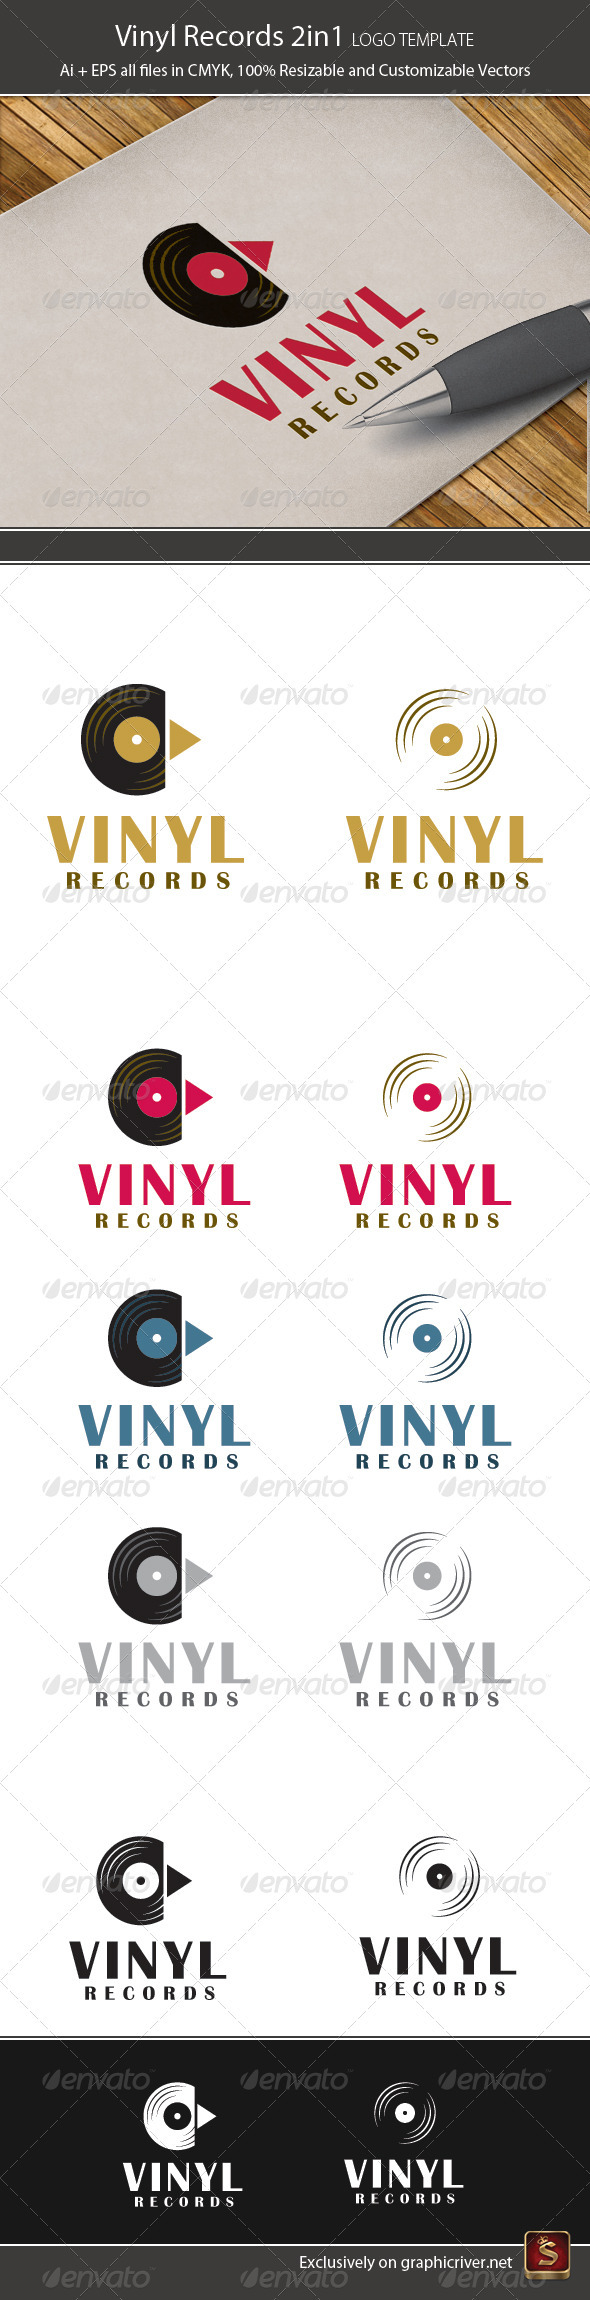 Vinyl Records 2in1 Logo Template